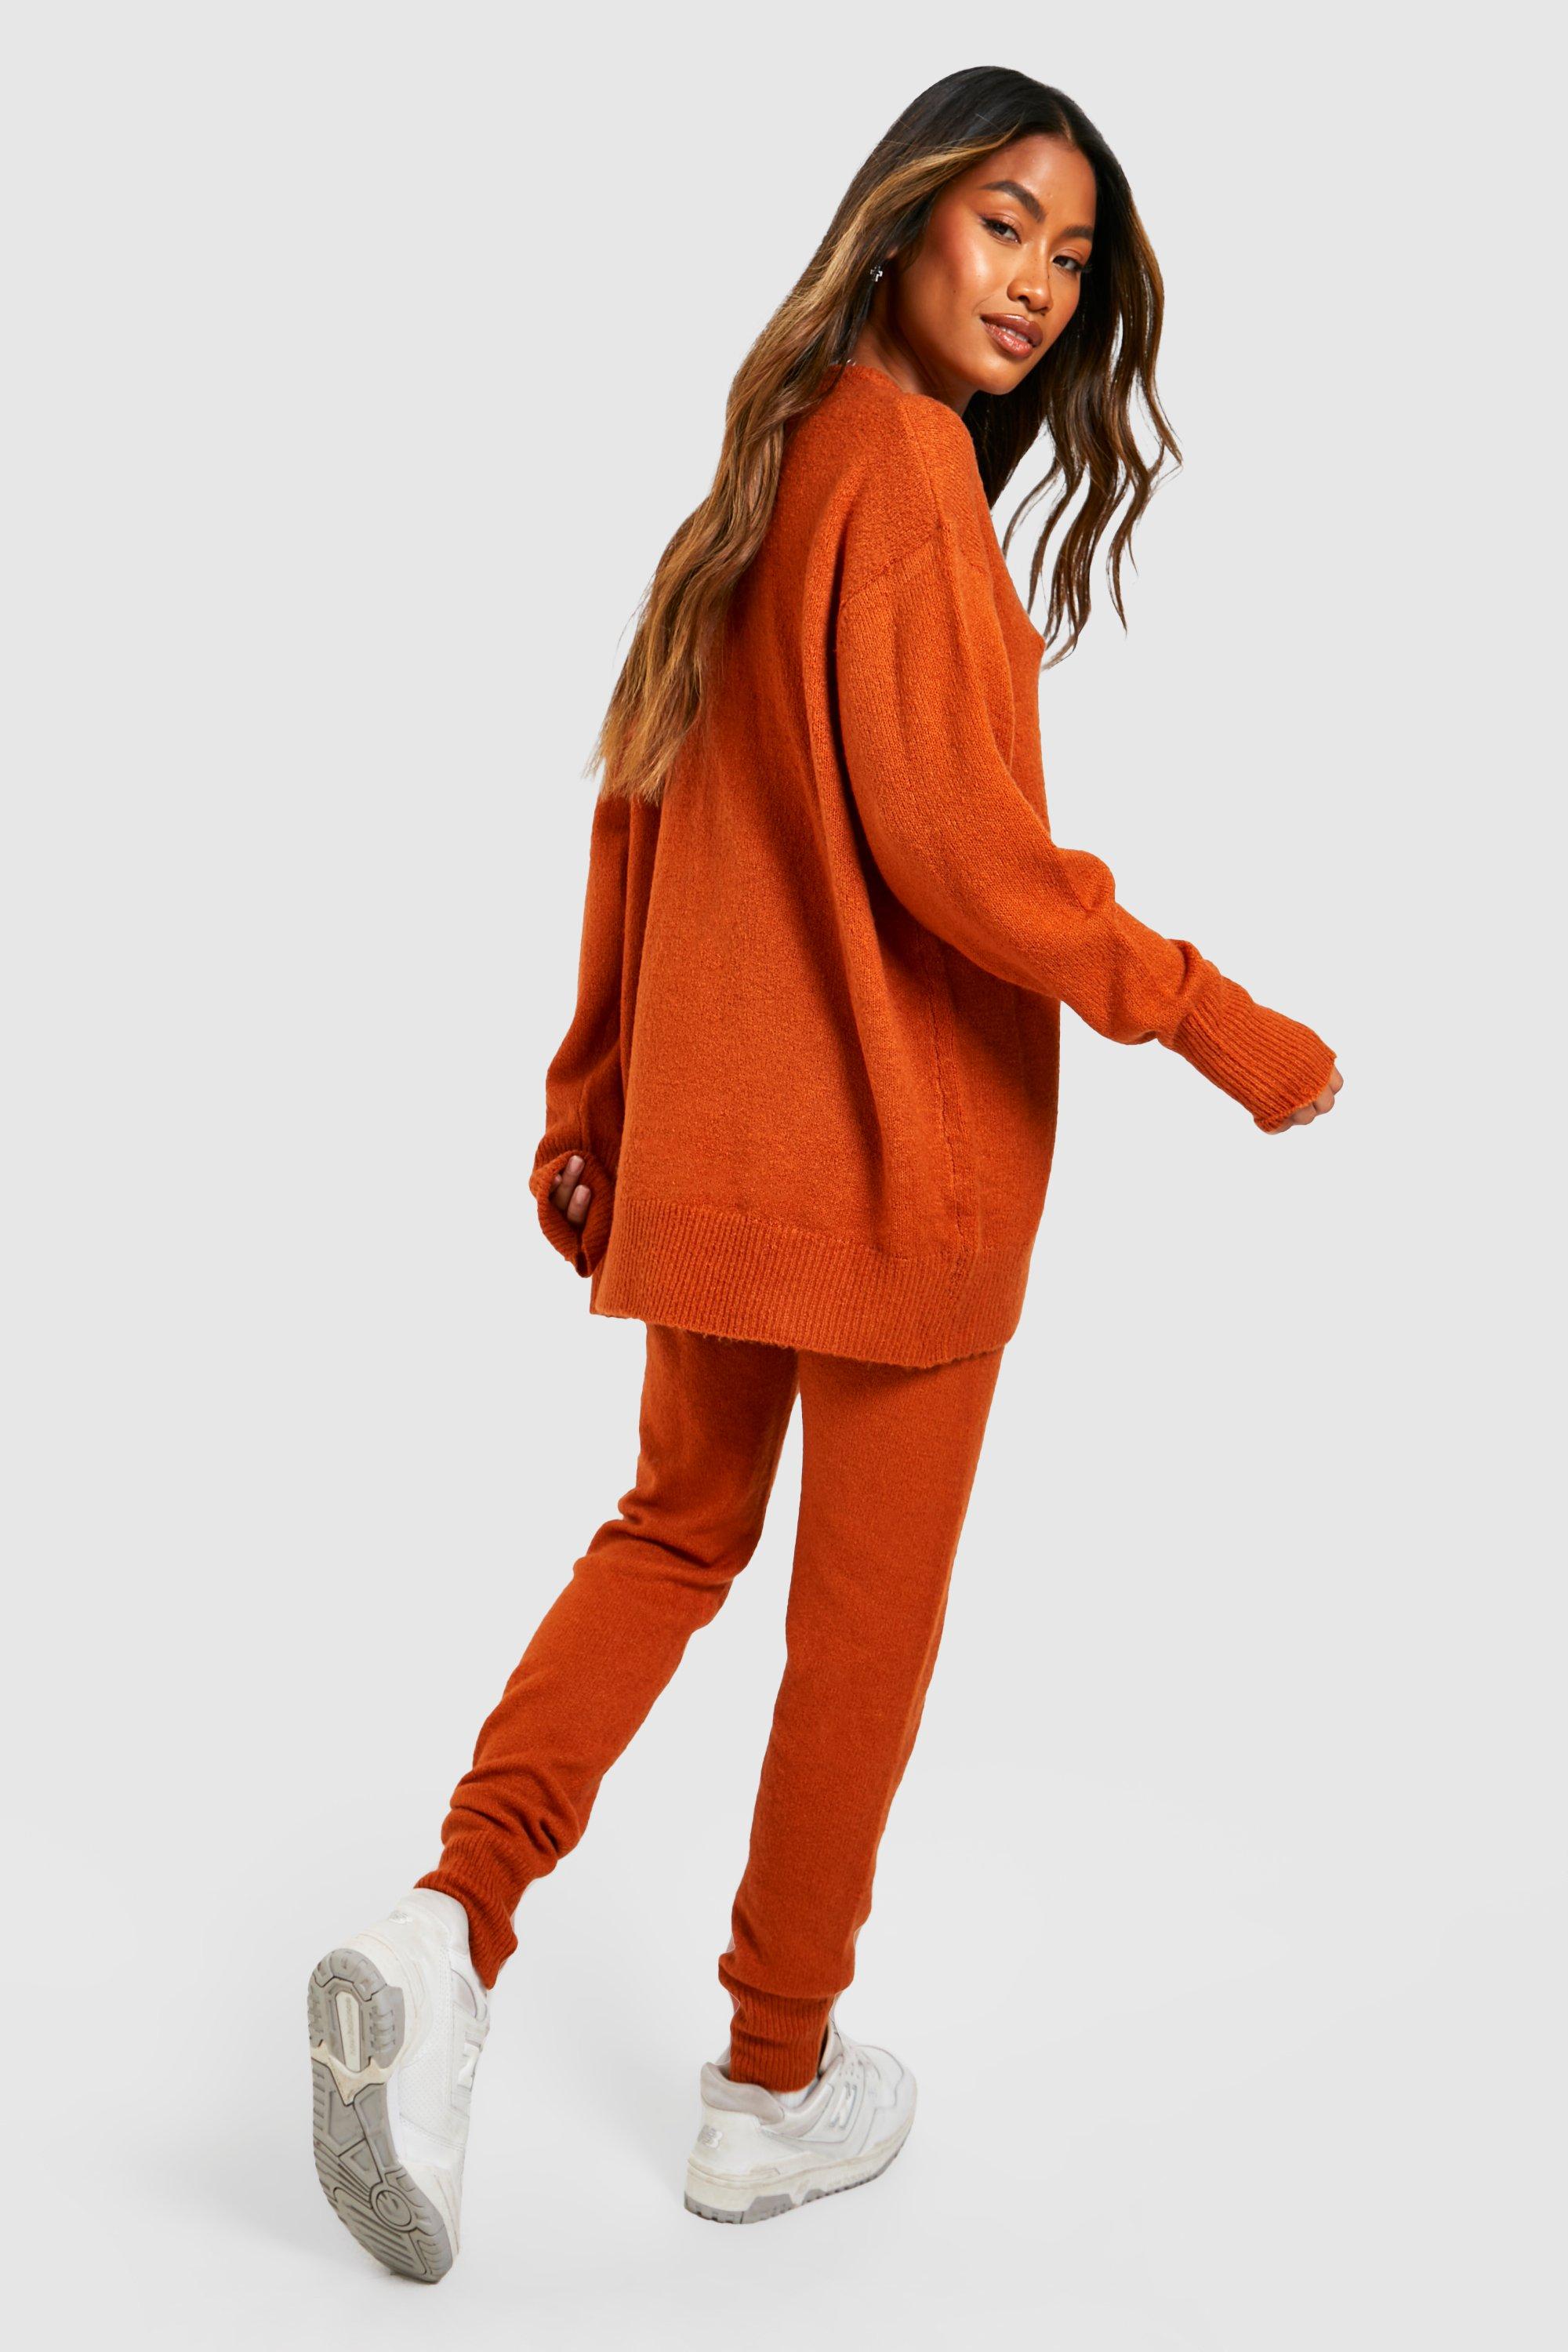 Outfit: Carrot pants and knit jumper, T E E T H A R E J A D E